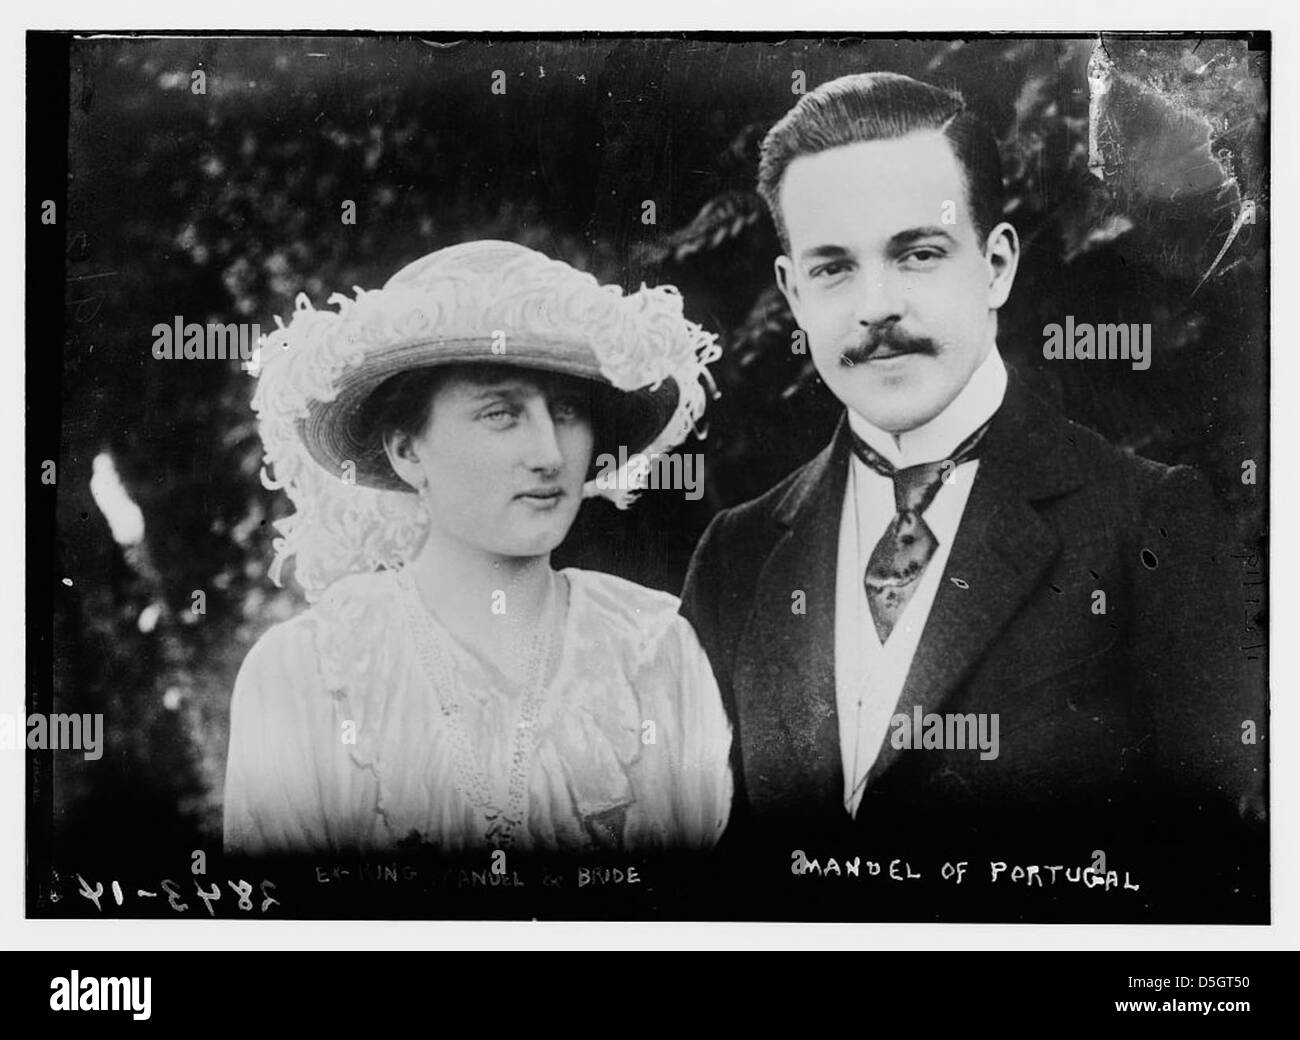 Ex-King Manuel & bride, Manuel of Portugal (LOC) Stock Photo